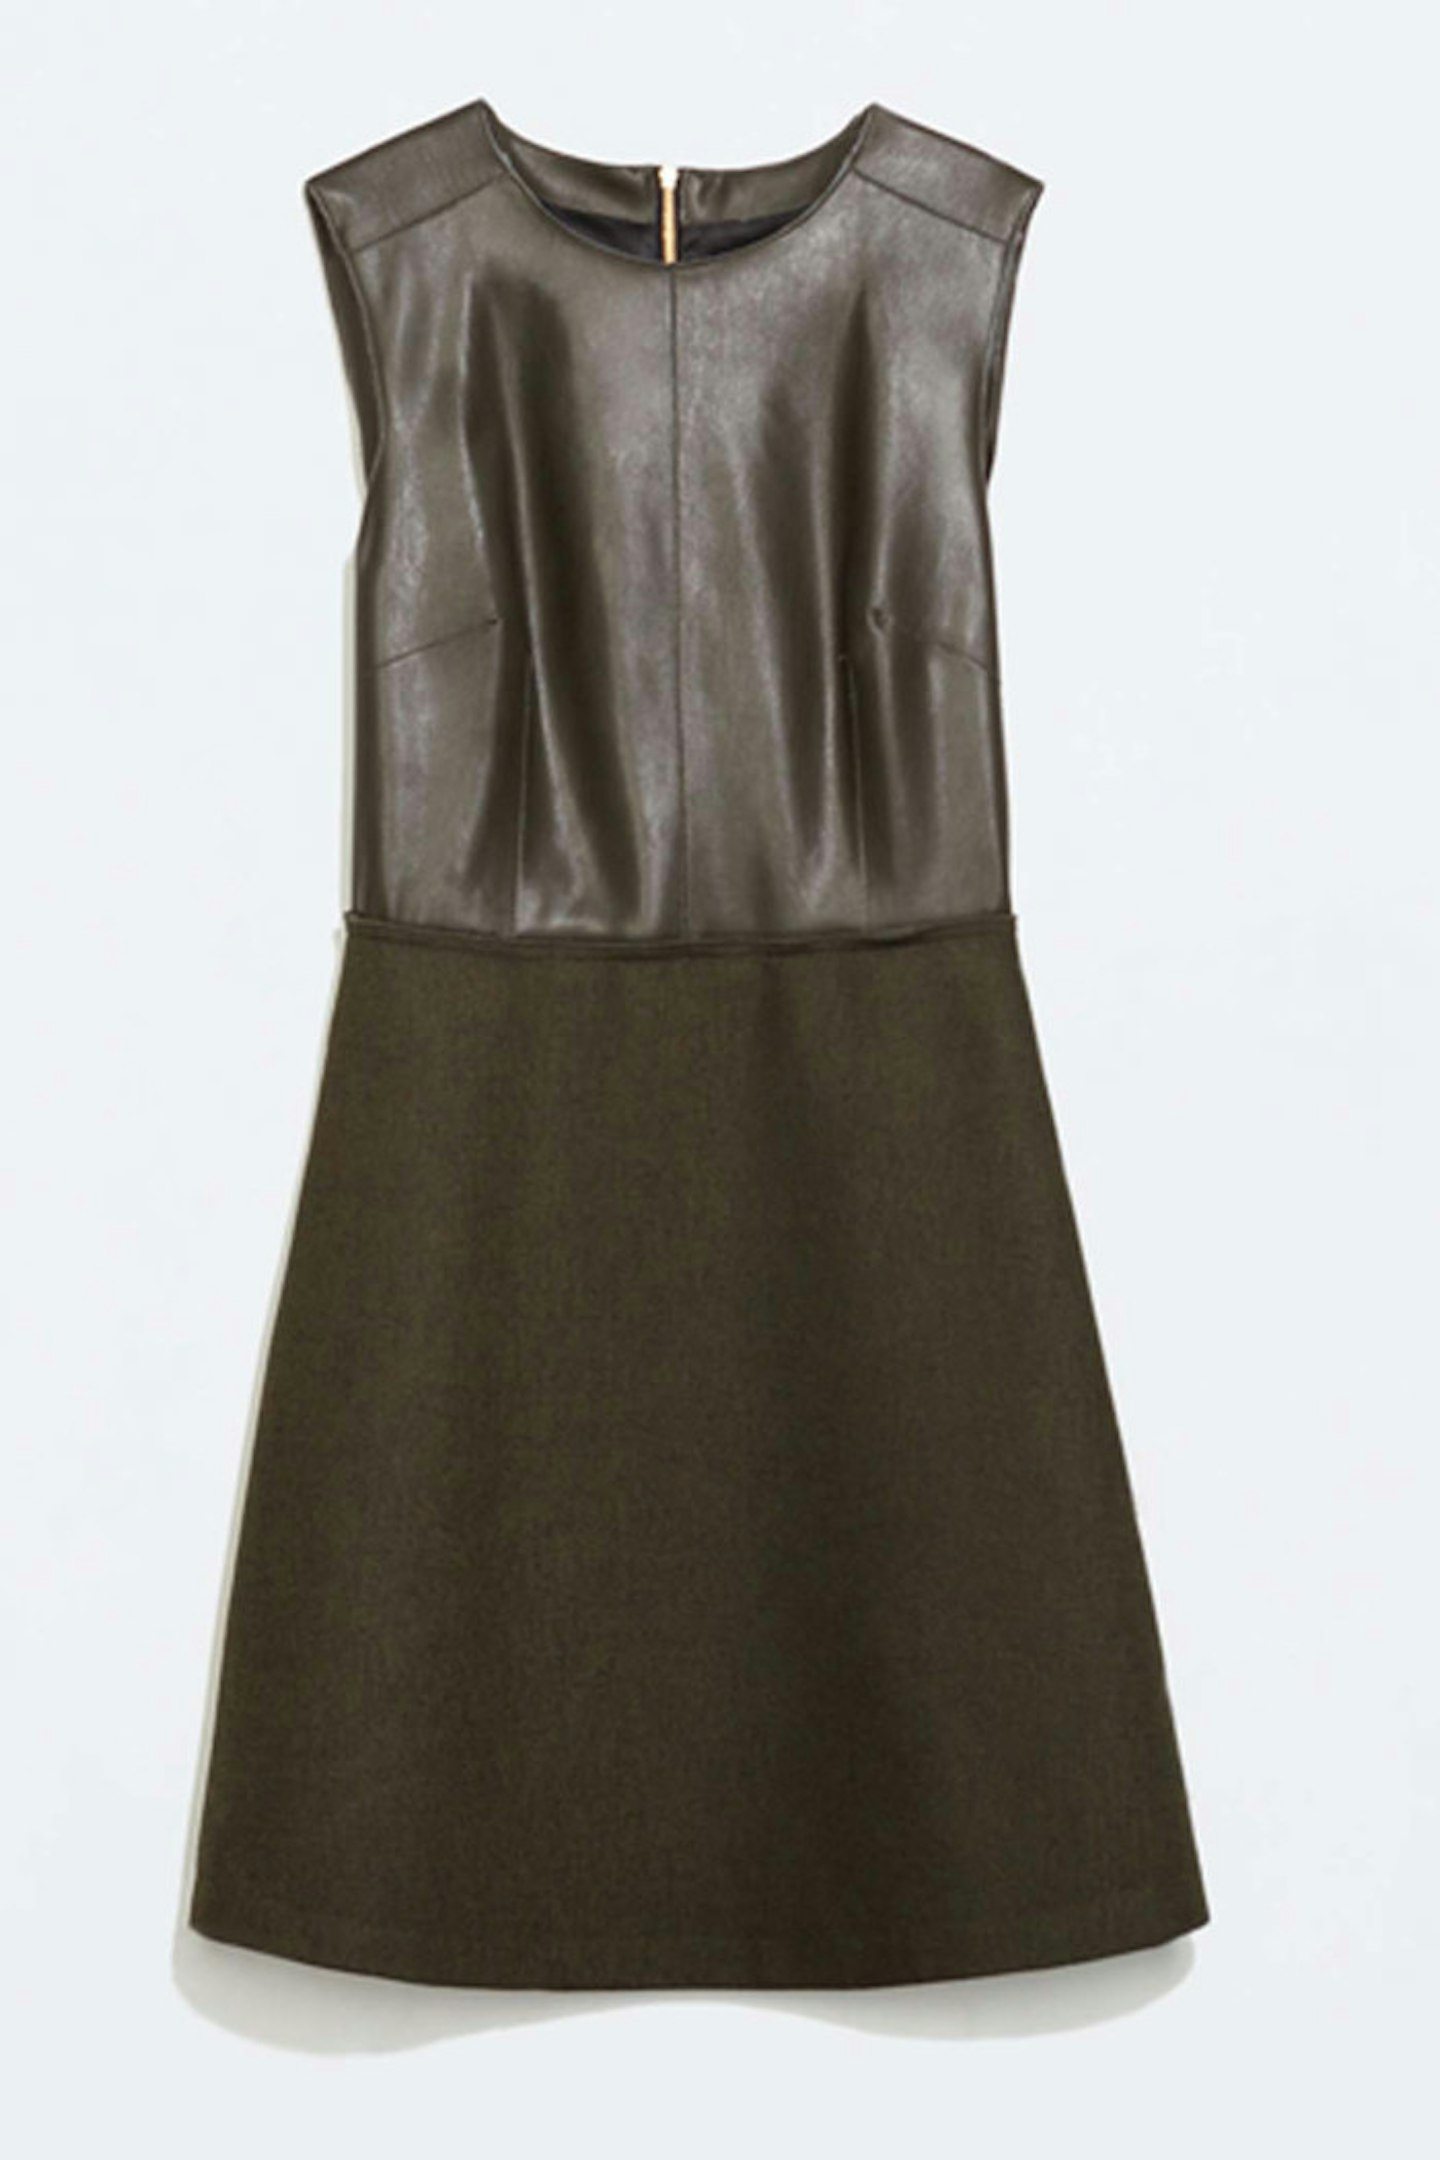 22. Wool Mix Dress, £39.99, Zara